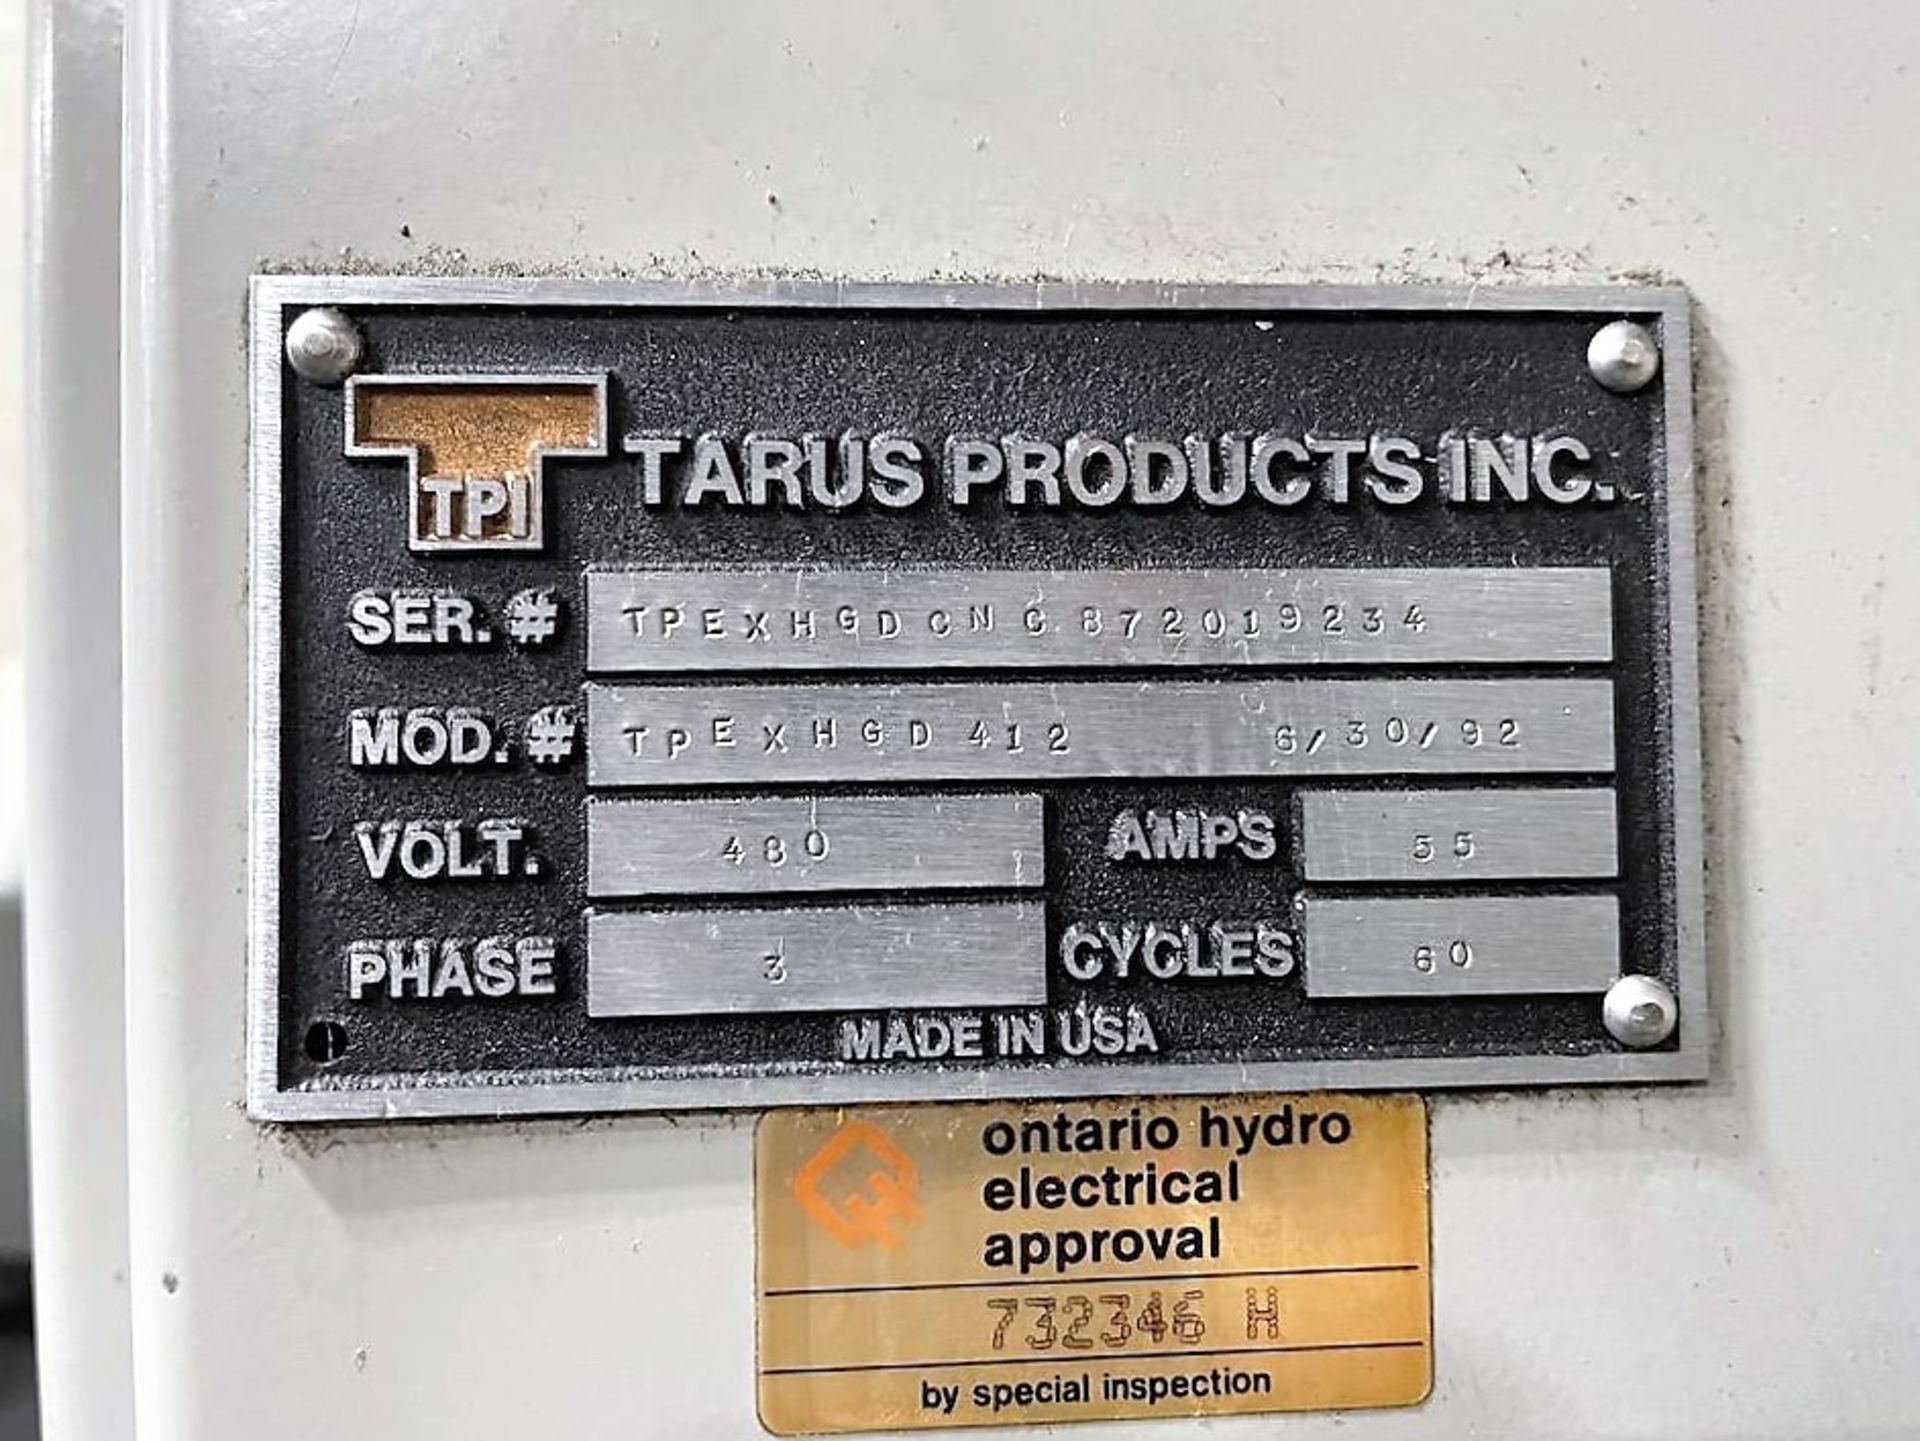 Tarus Model TPE-XHGD-412 CNC Gun Drill, Heidenhain 530i CNC Control (Retrofit 2014), 146" x 60" Tabl - Image 17 of 17